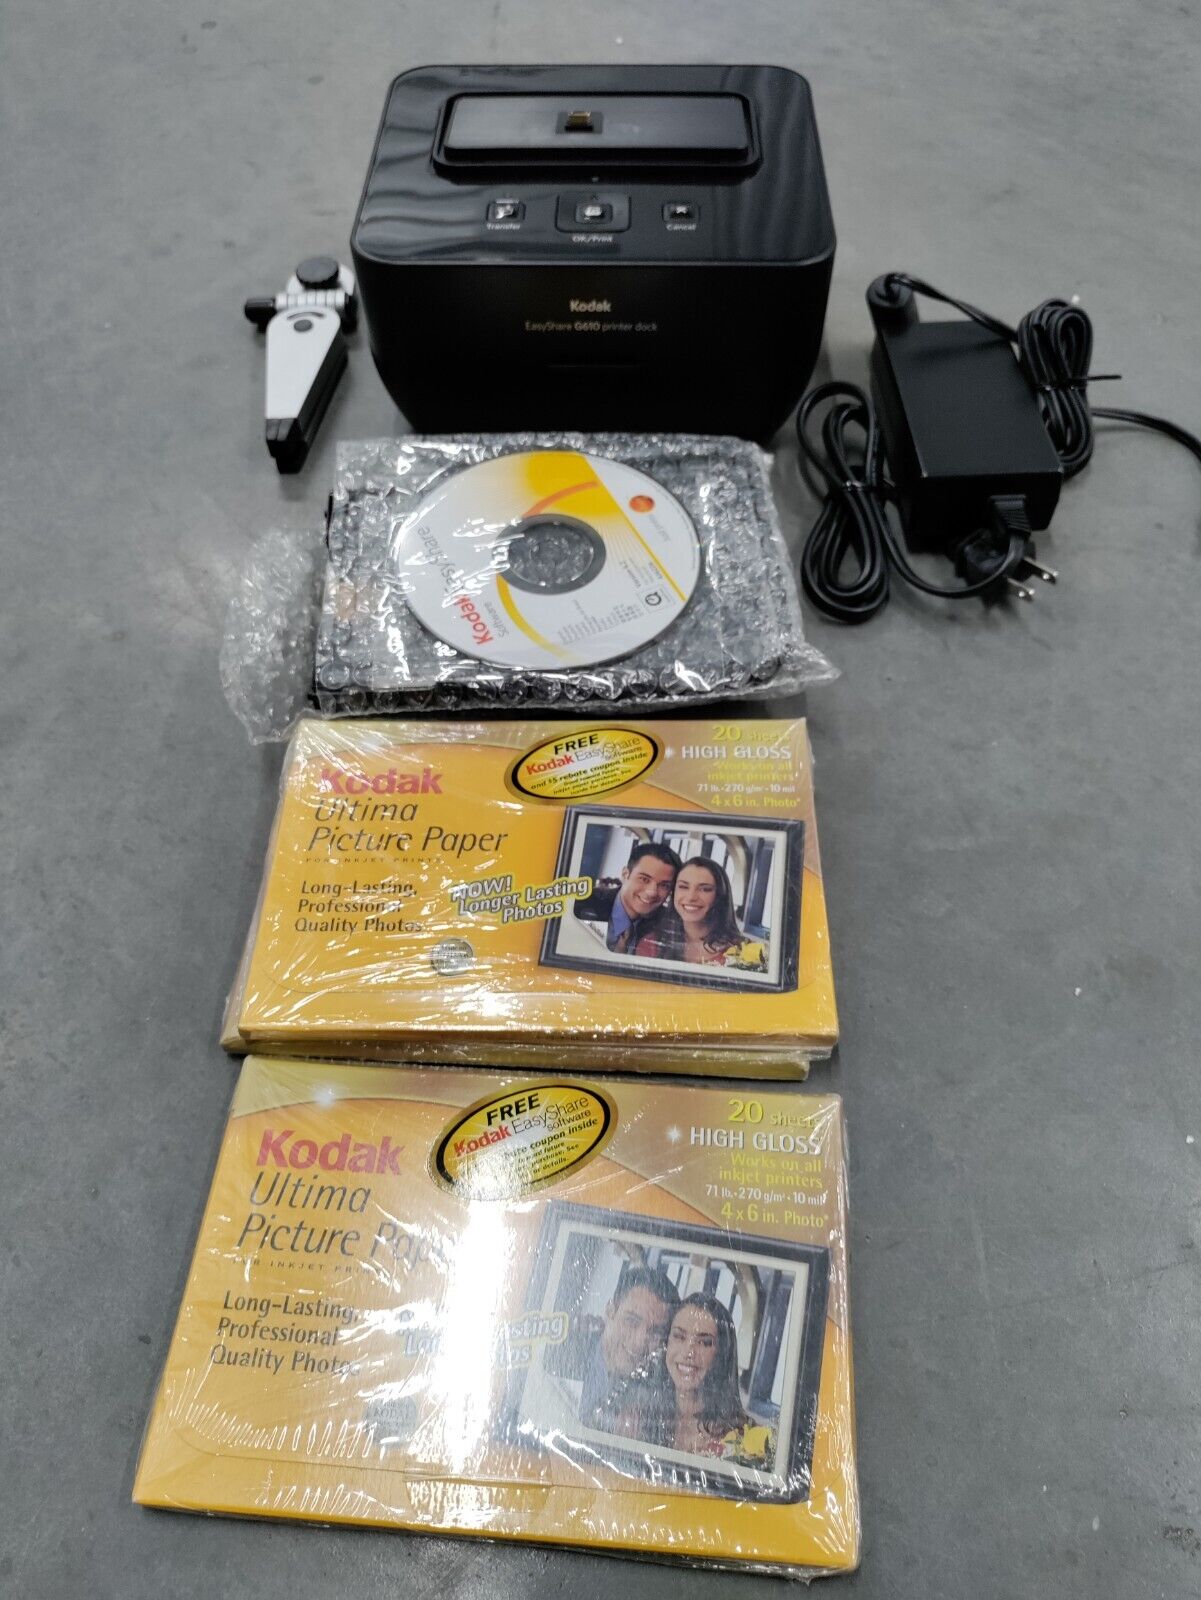 Kodak EasyShare Dock G610 Digital Photo Printer Bundle 3 Pack Picture Paper